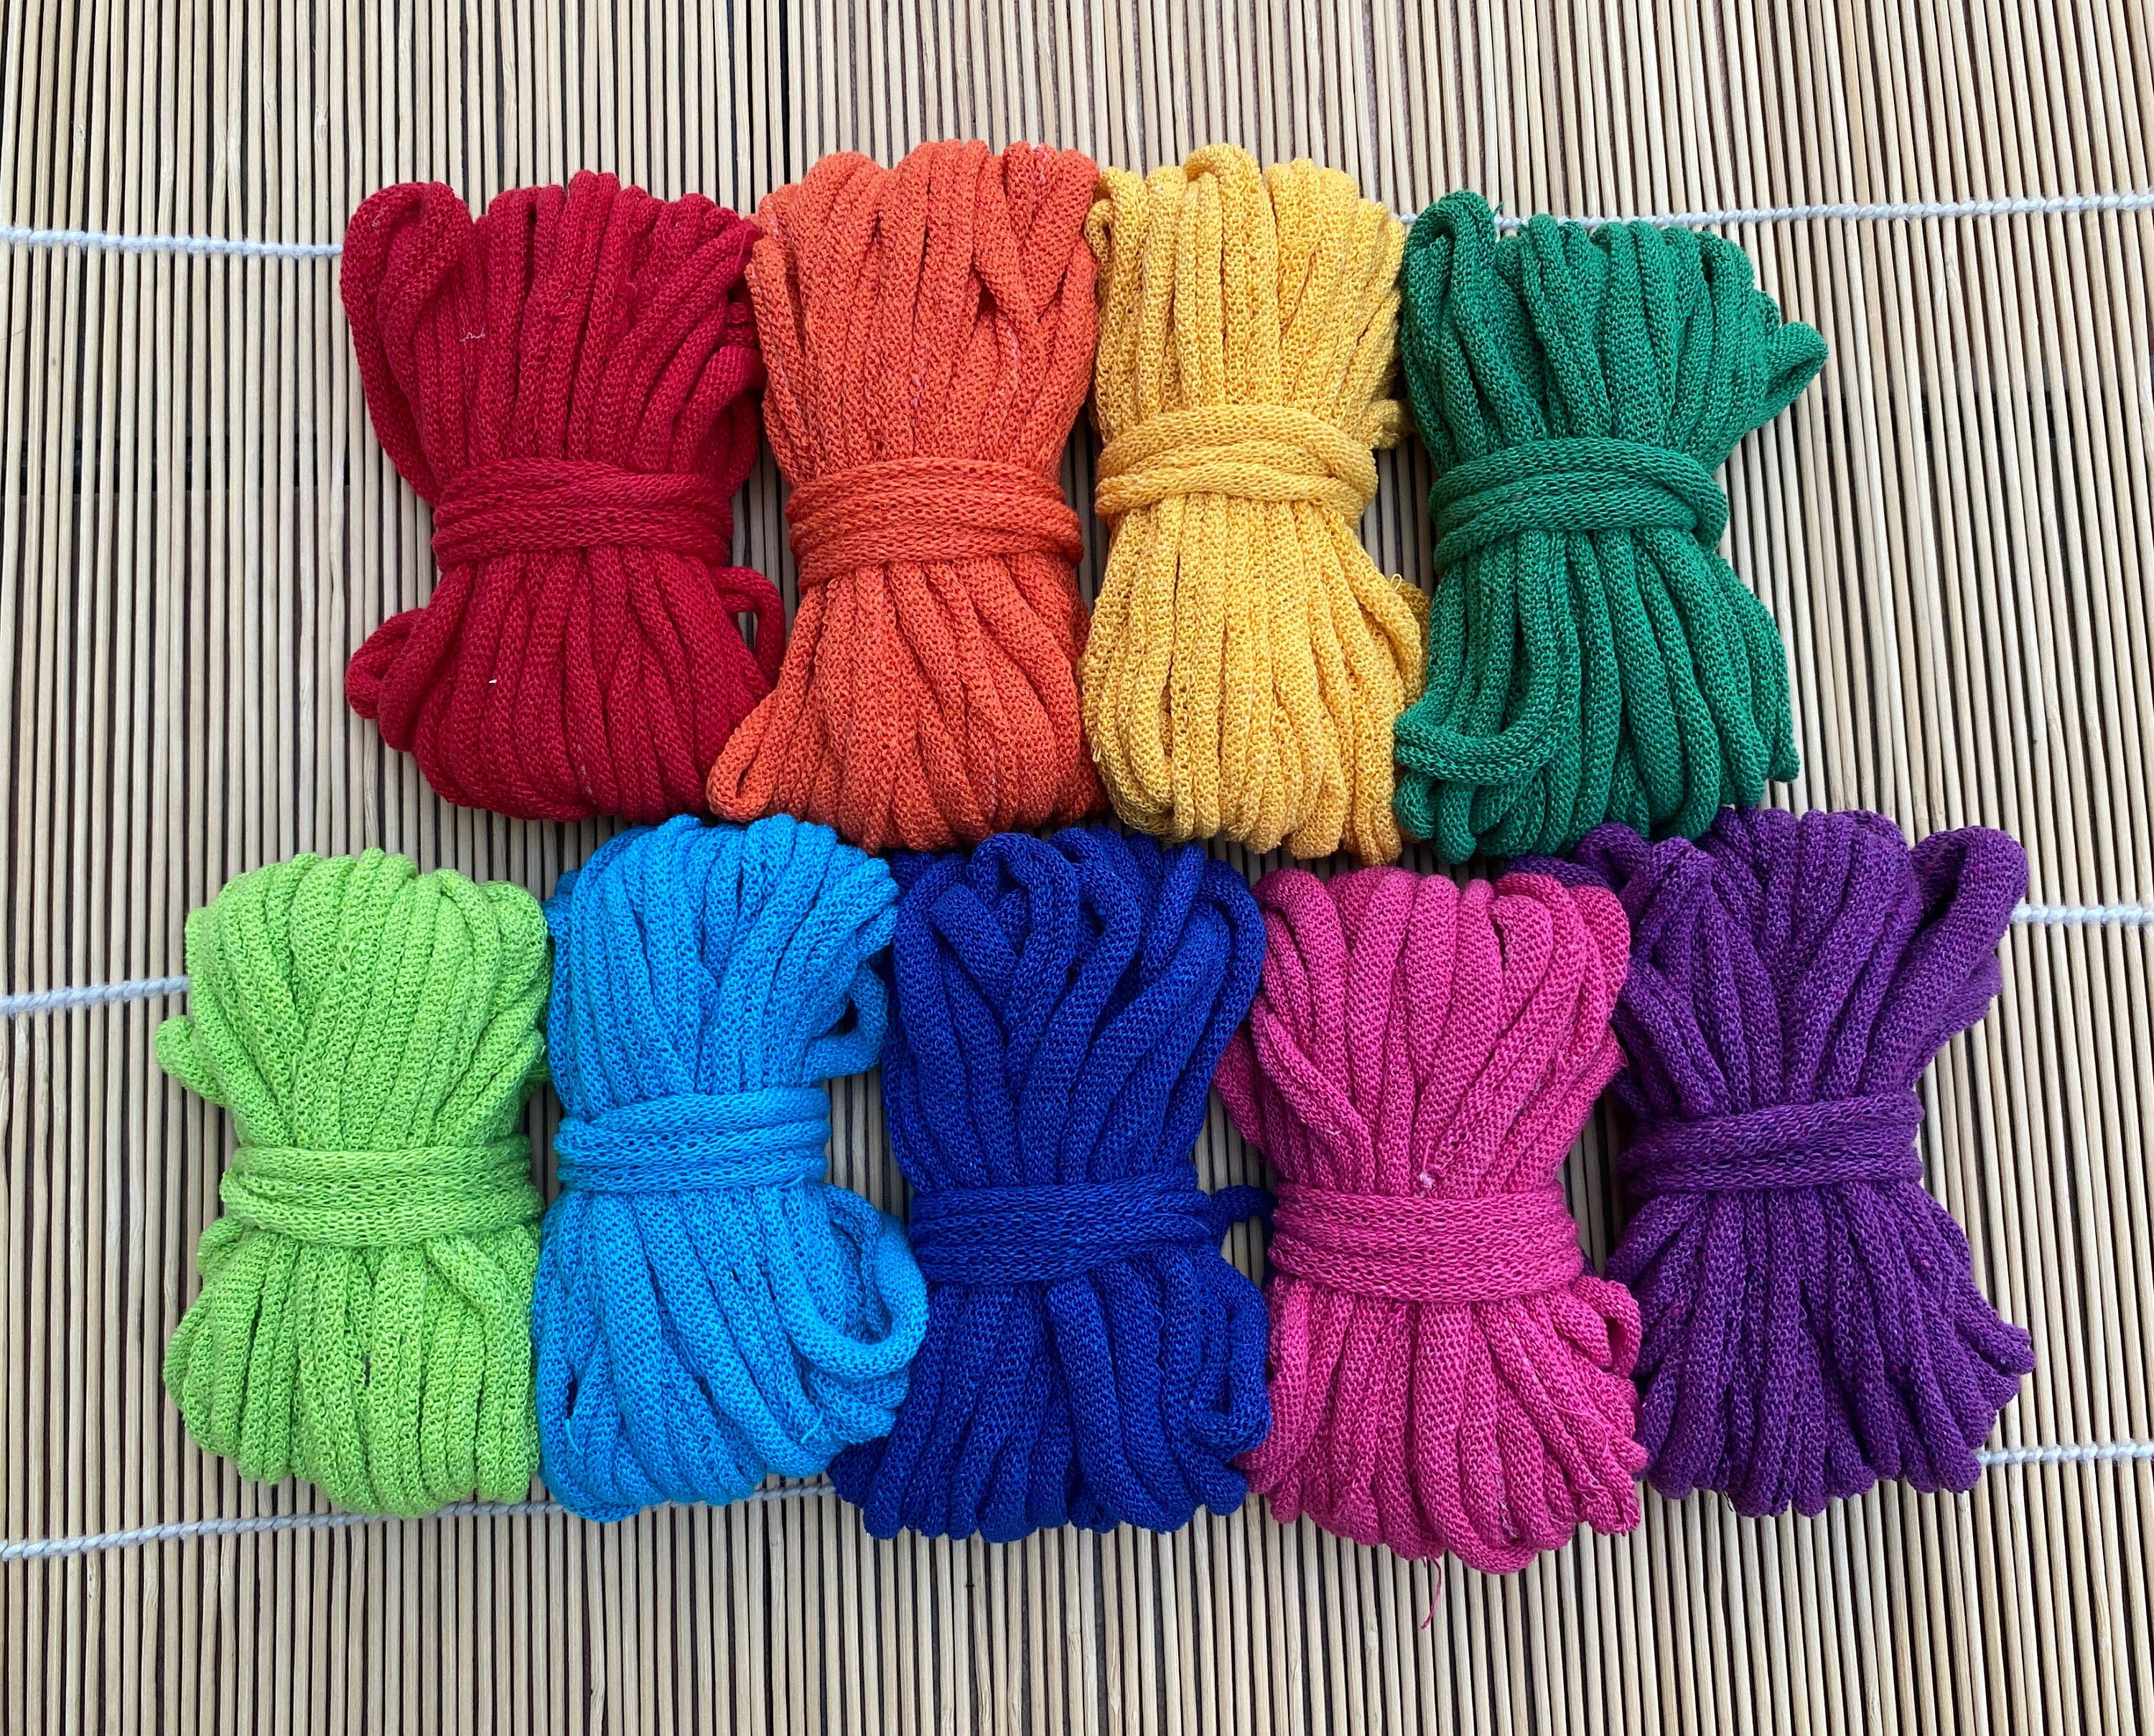 Pro Size Potholder Loops Assortment Bags, 10, Makes 6 Potholder, Brights or  Designer Colorway. Bulk Weaving Loops. 